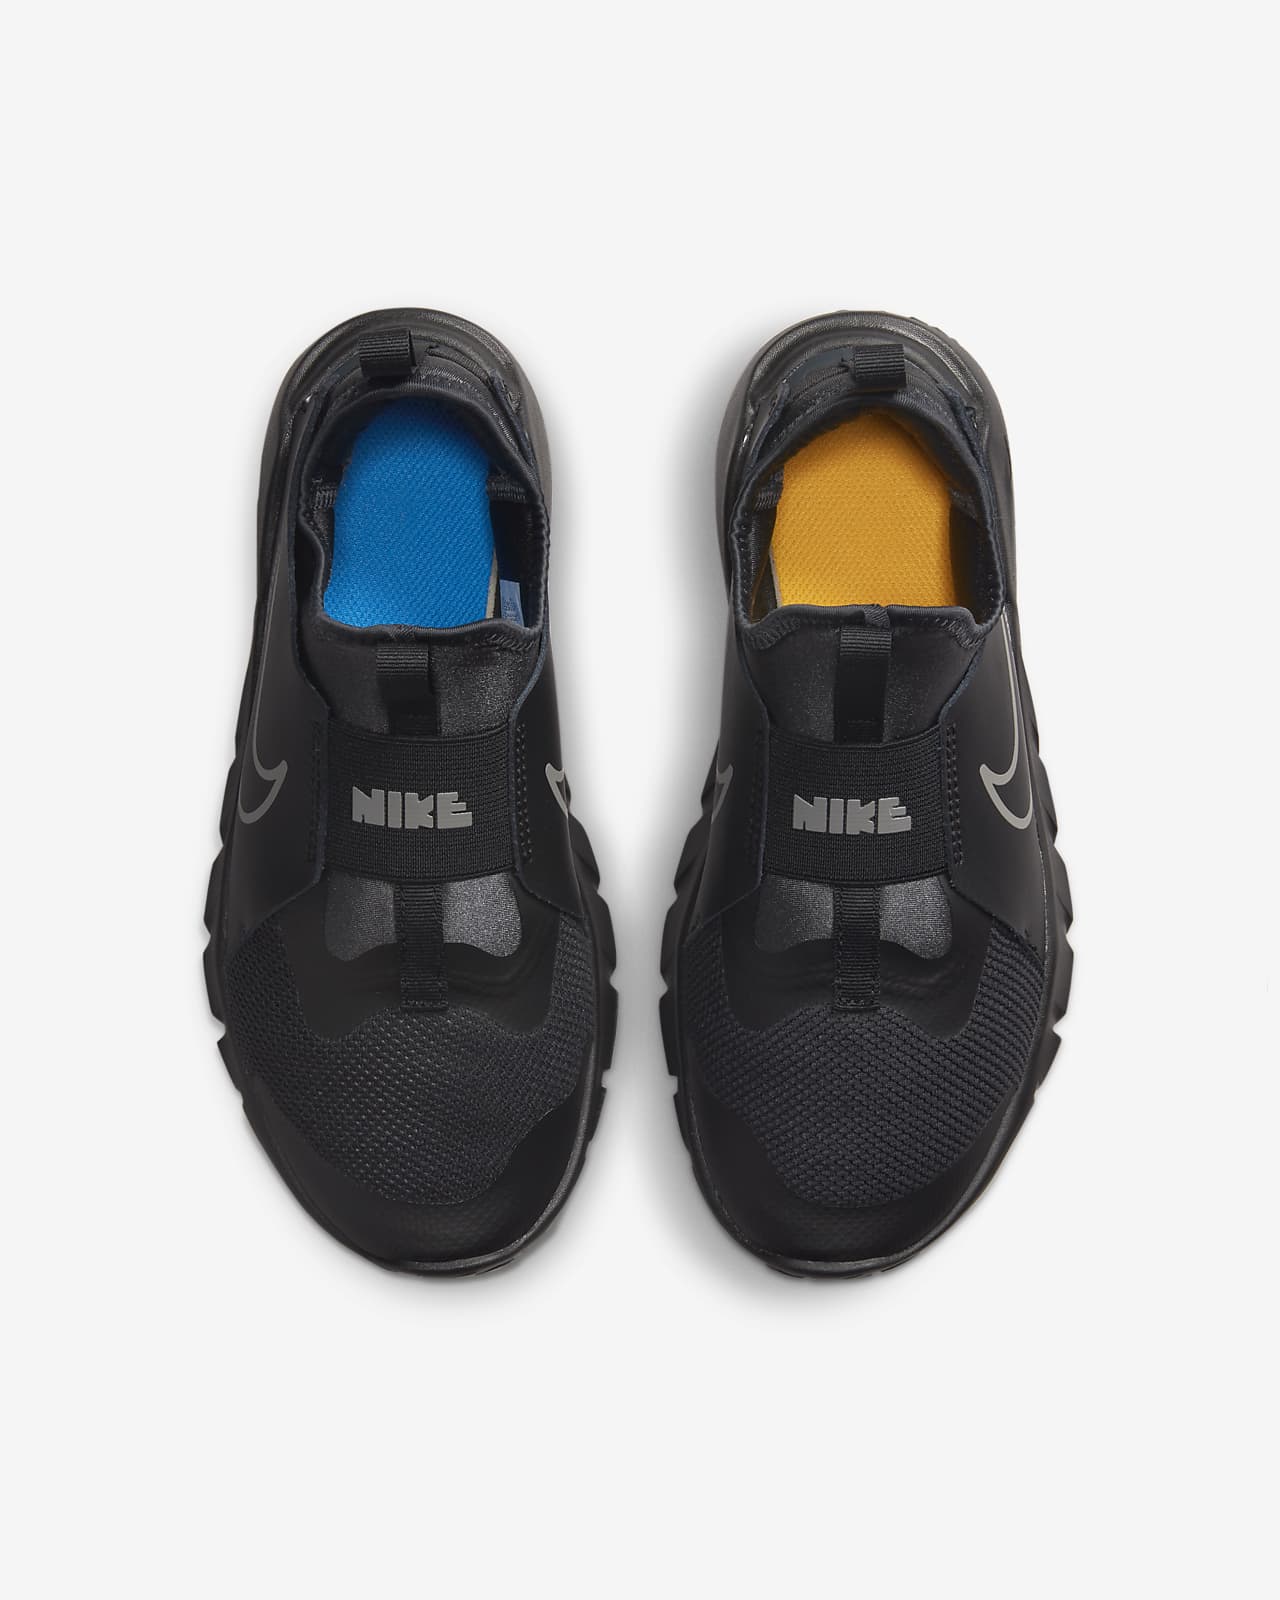 2 Running Road Shoes. Kids\' Runner Flex Big Nike